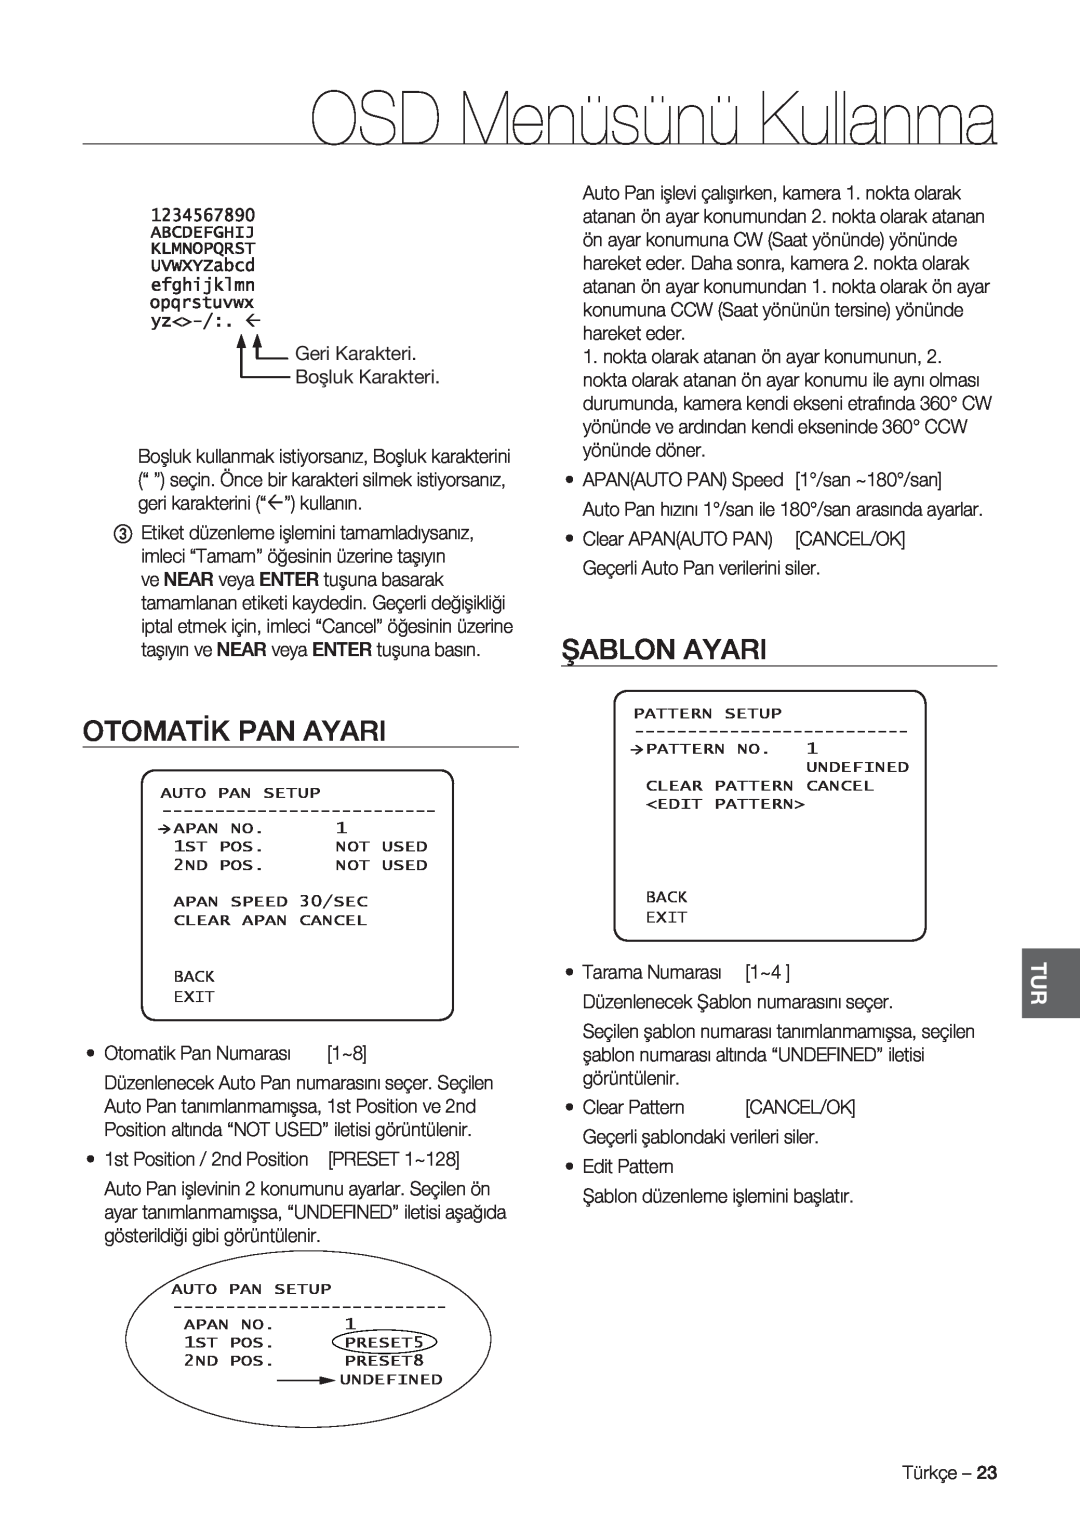 Samsung SCC-C7478P manual Otomatik Pan Ayari, Şablon Ayari, OSD Menüsünü Kullanma 